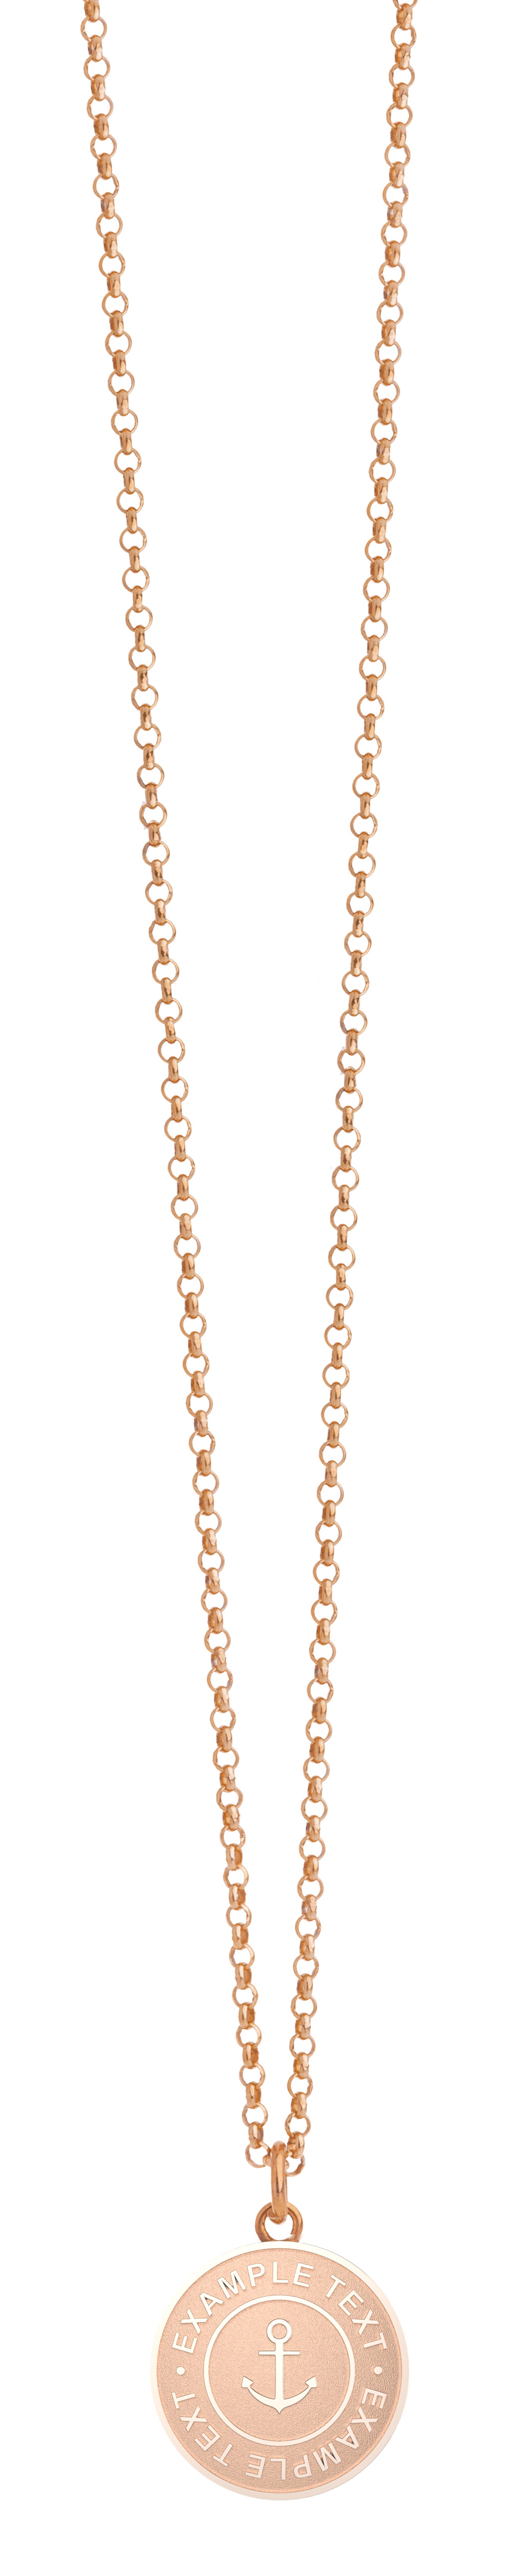 Custom Made Rose Gold Necklace